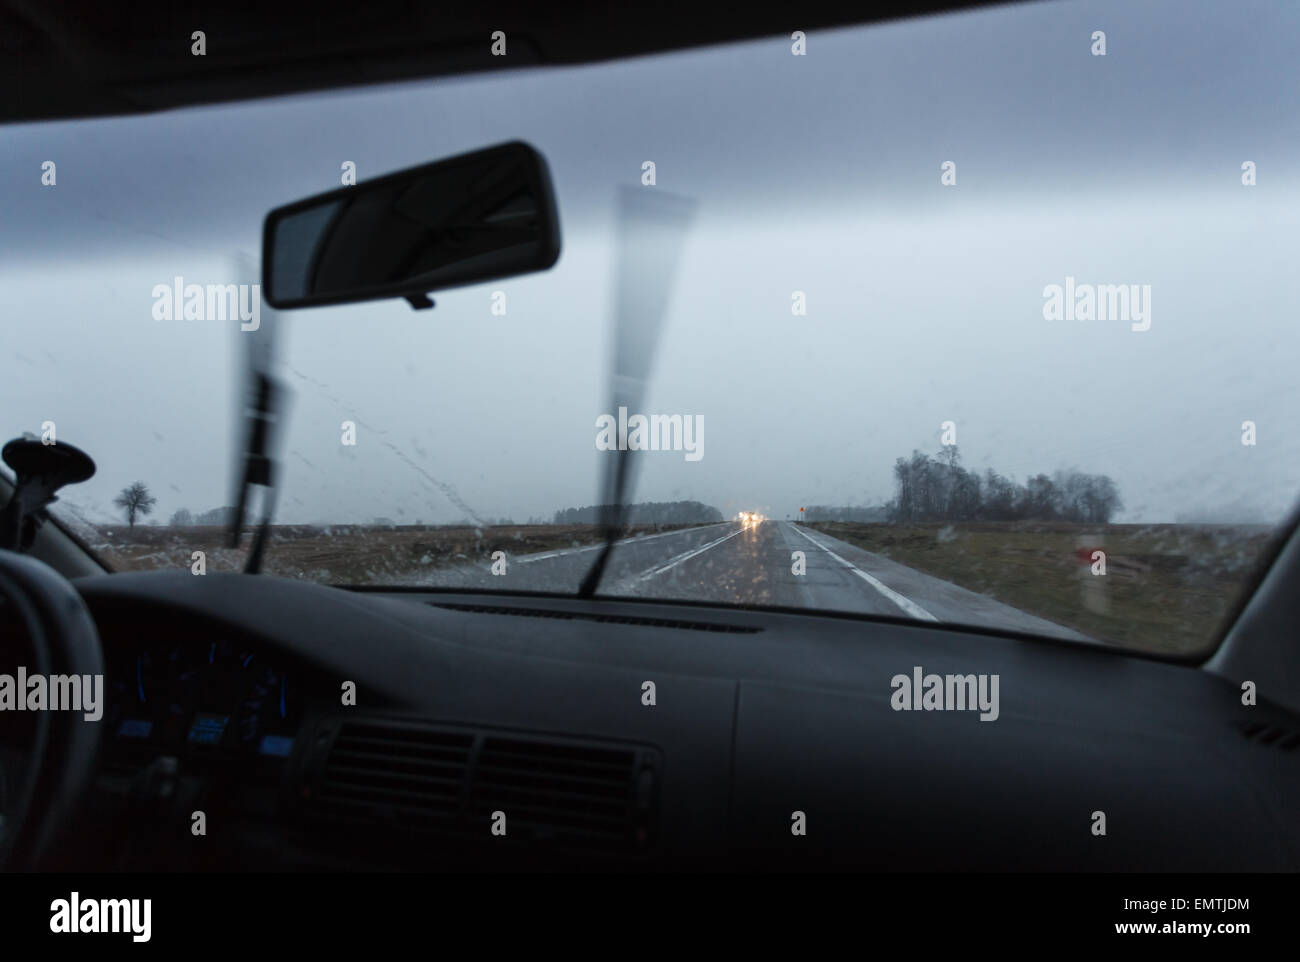 Windshield wiper rain car interior hi-res stock photography and